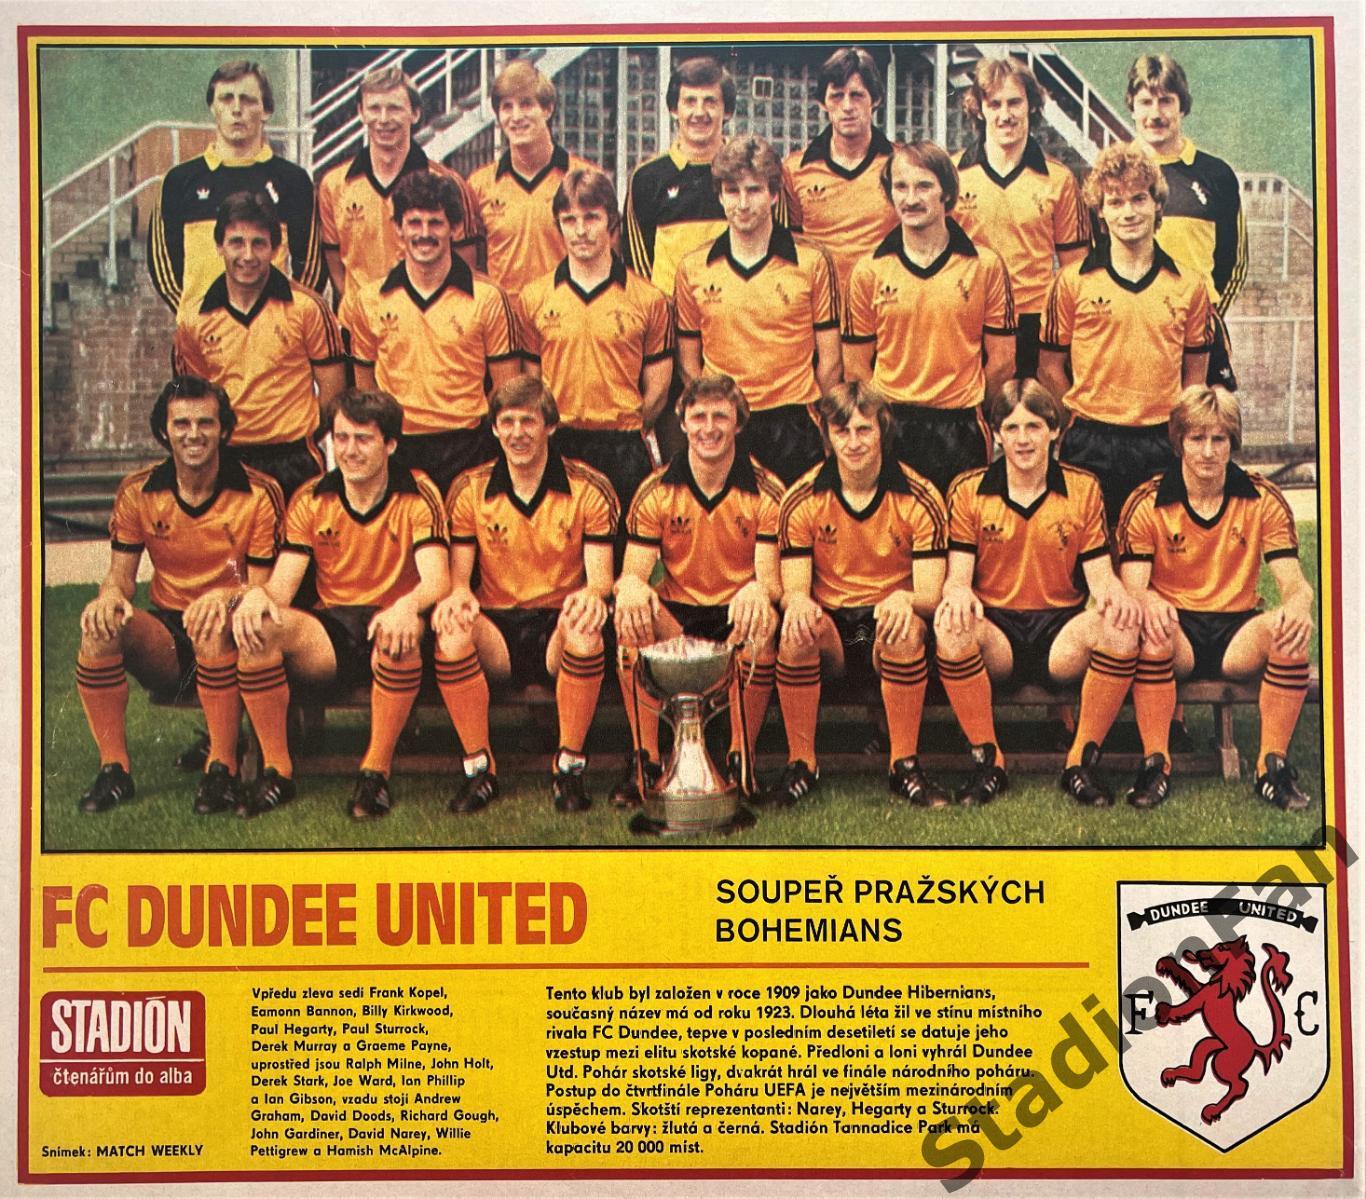 Постер из журнала Стадион (Stadion) - Dundee United, 1983.